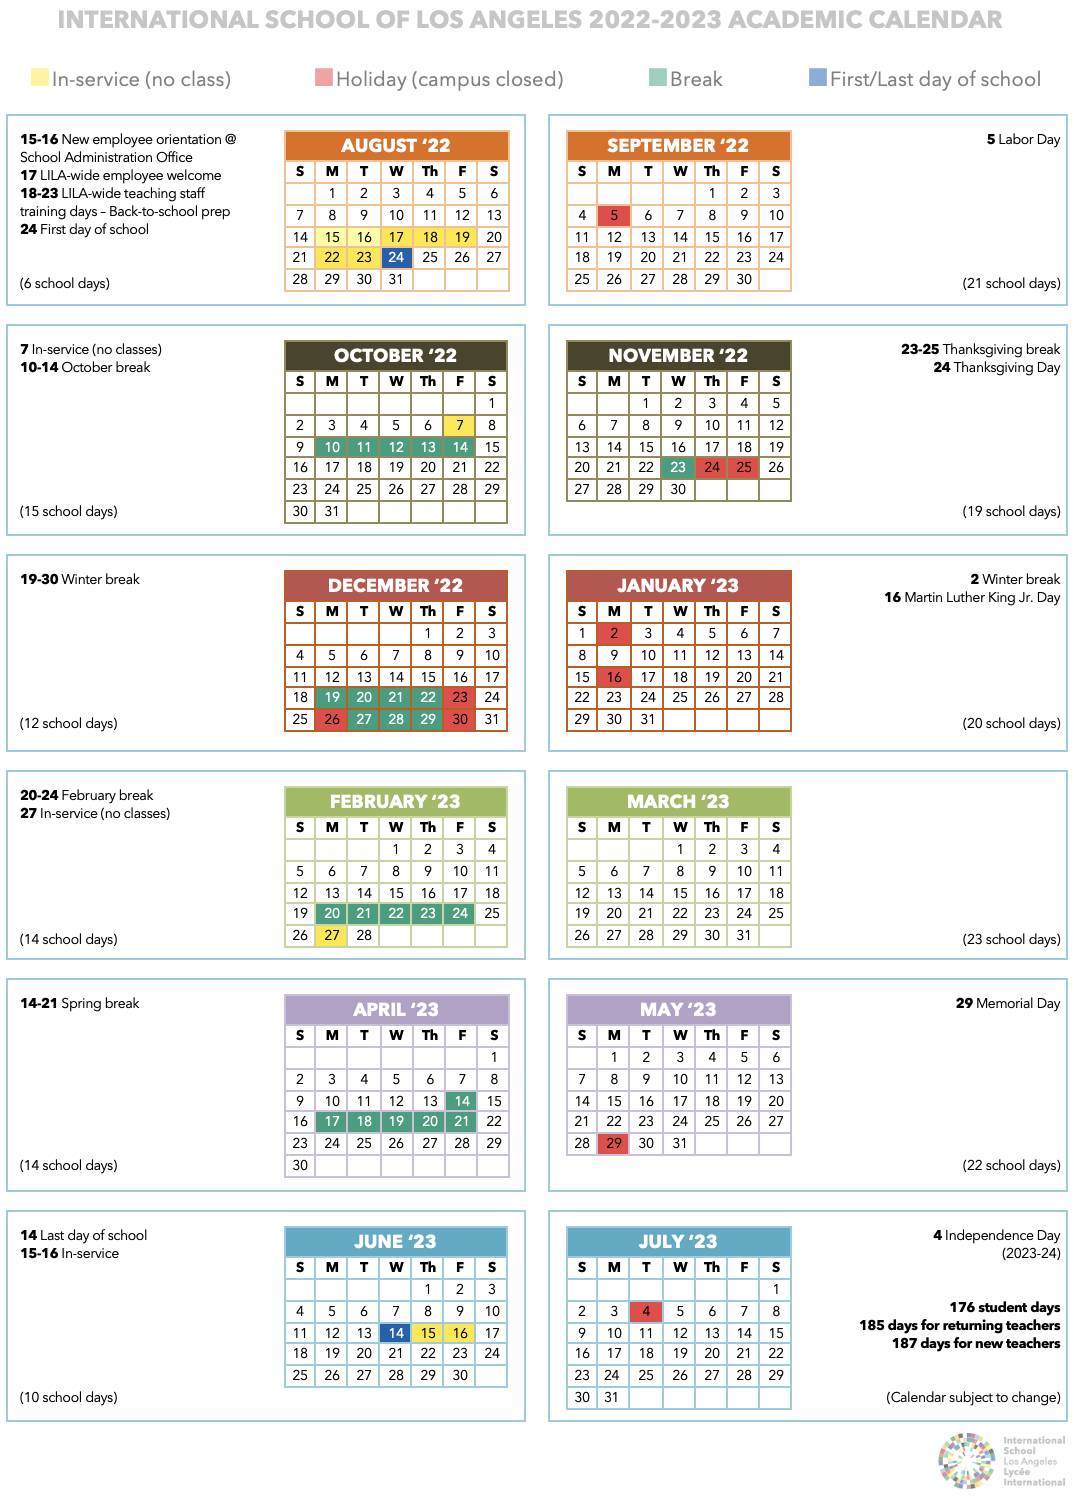 Csuf Fall 2022 Calendar Calendar | International School Of Los Angeles